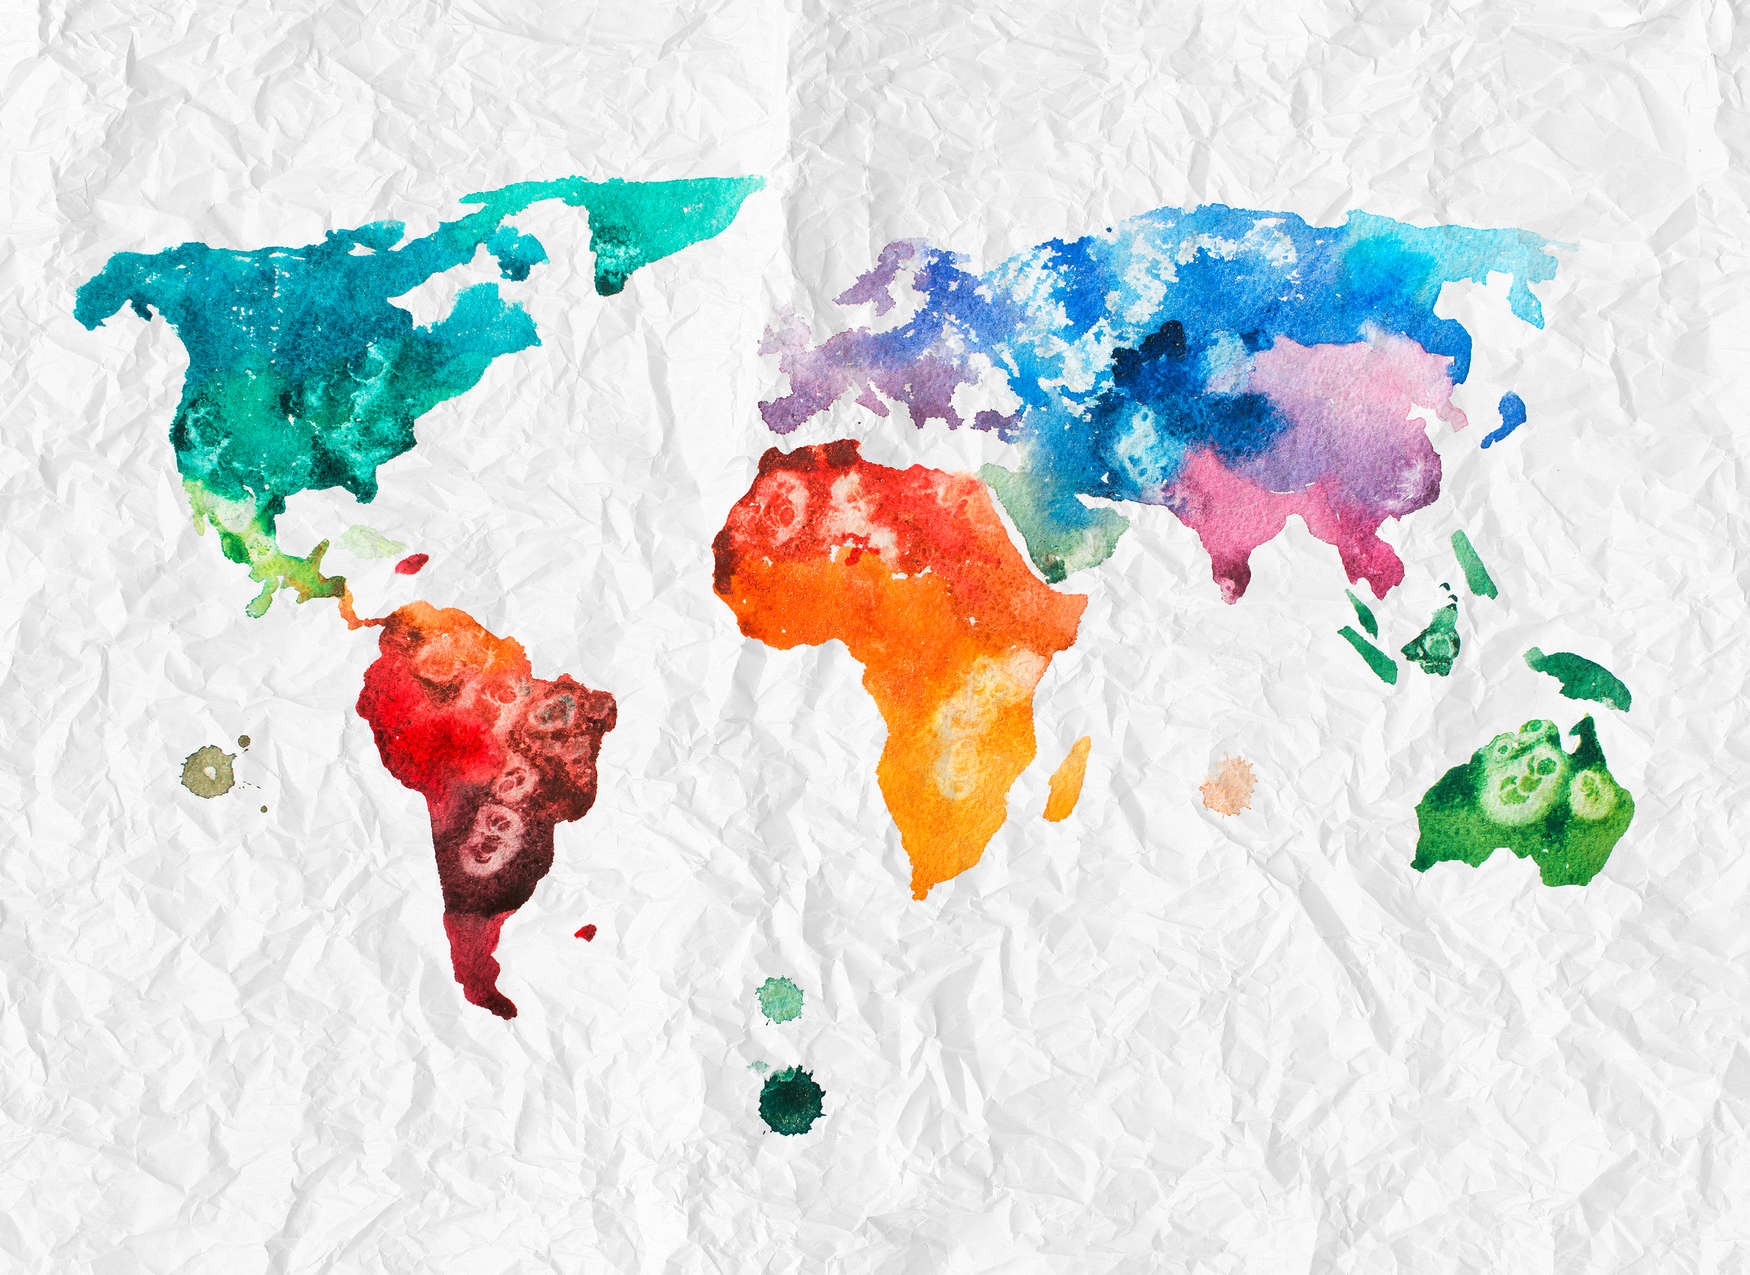             World maps mural watercolour - colourful, white
        